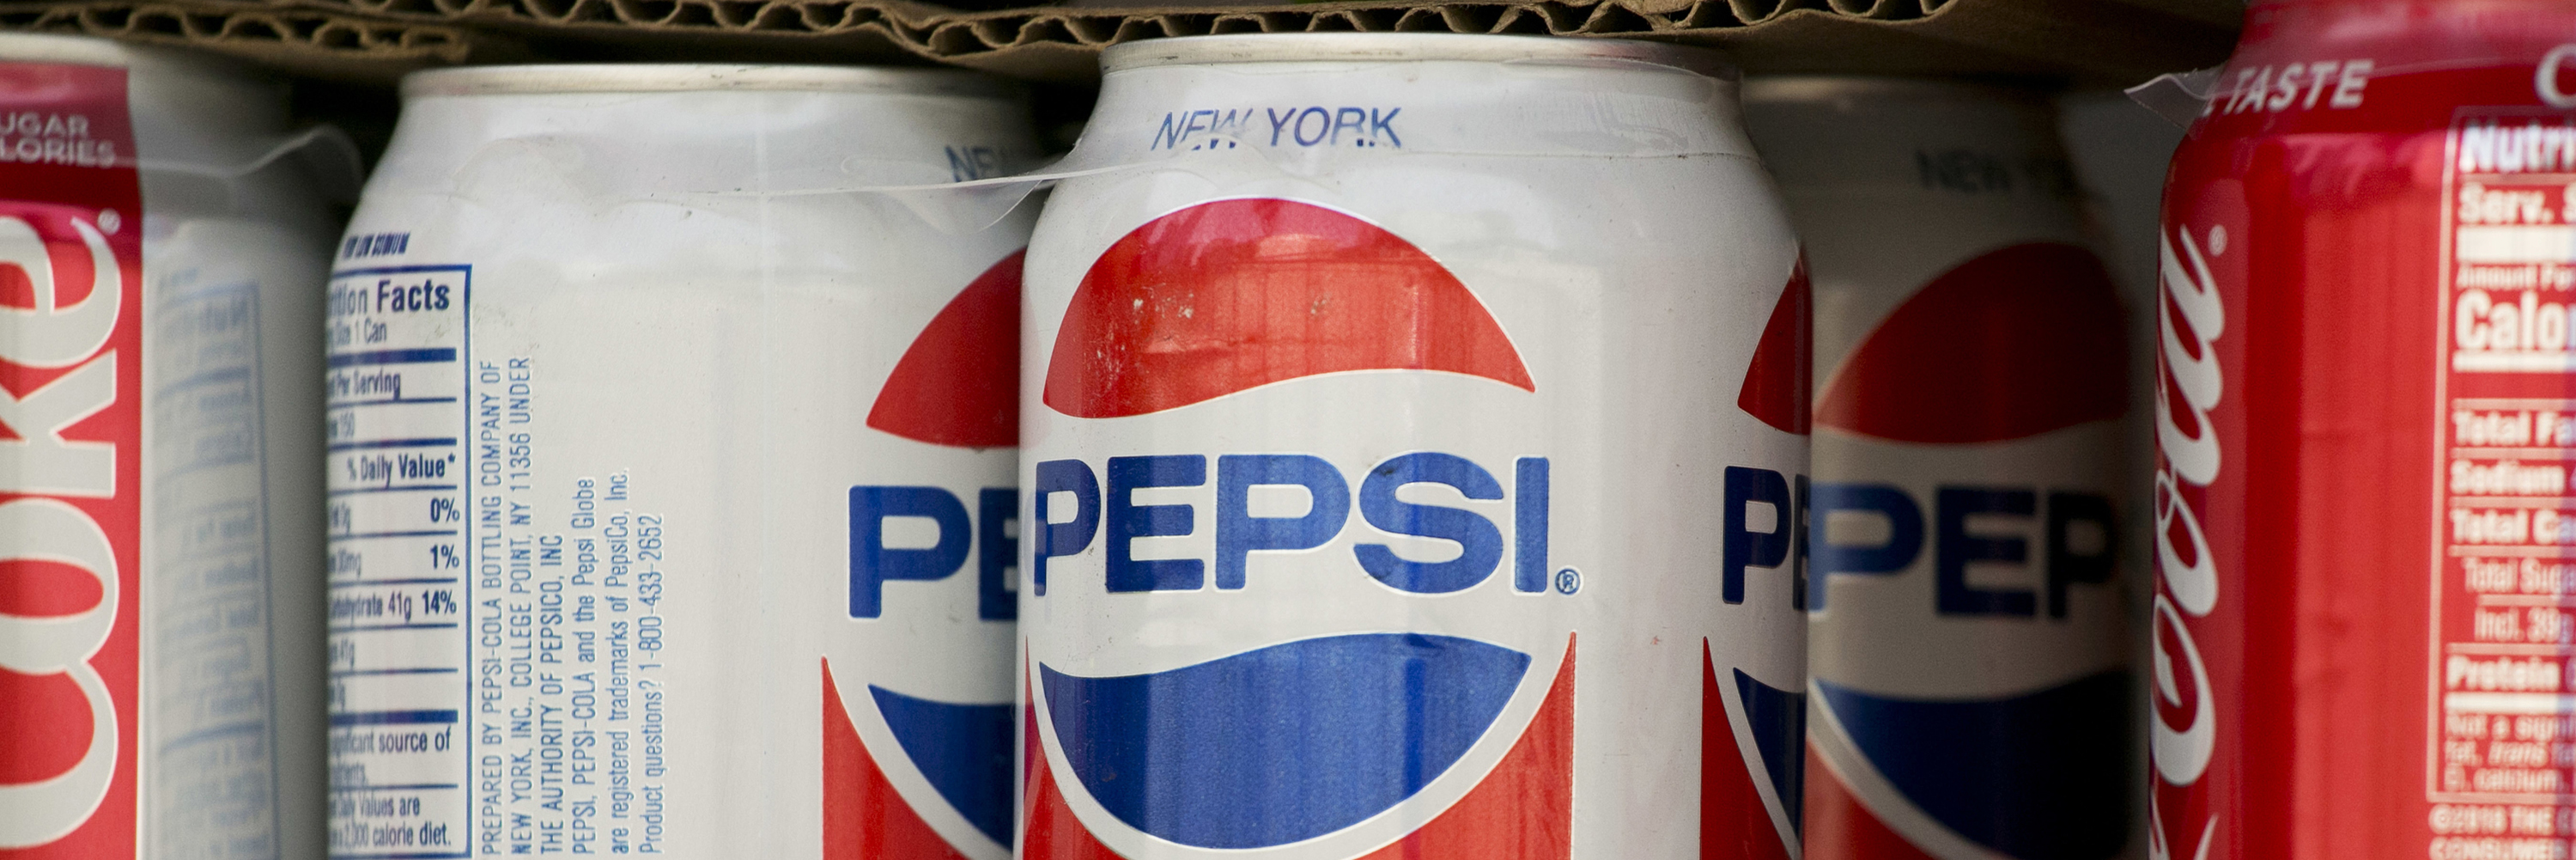 WSJ: PepsiCo, Sodastream Expand Partnership 